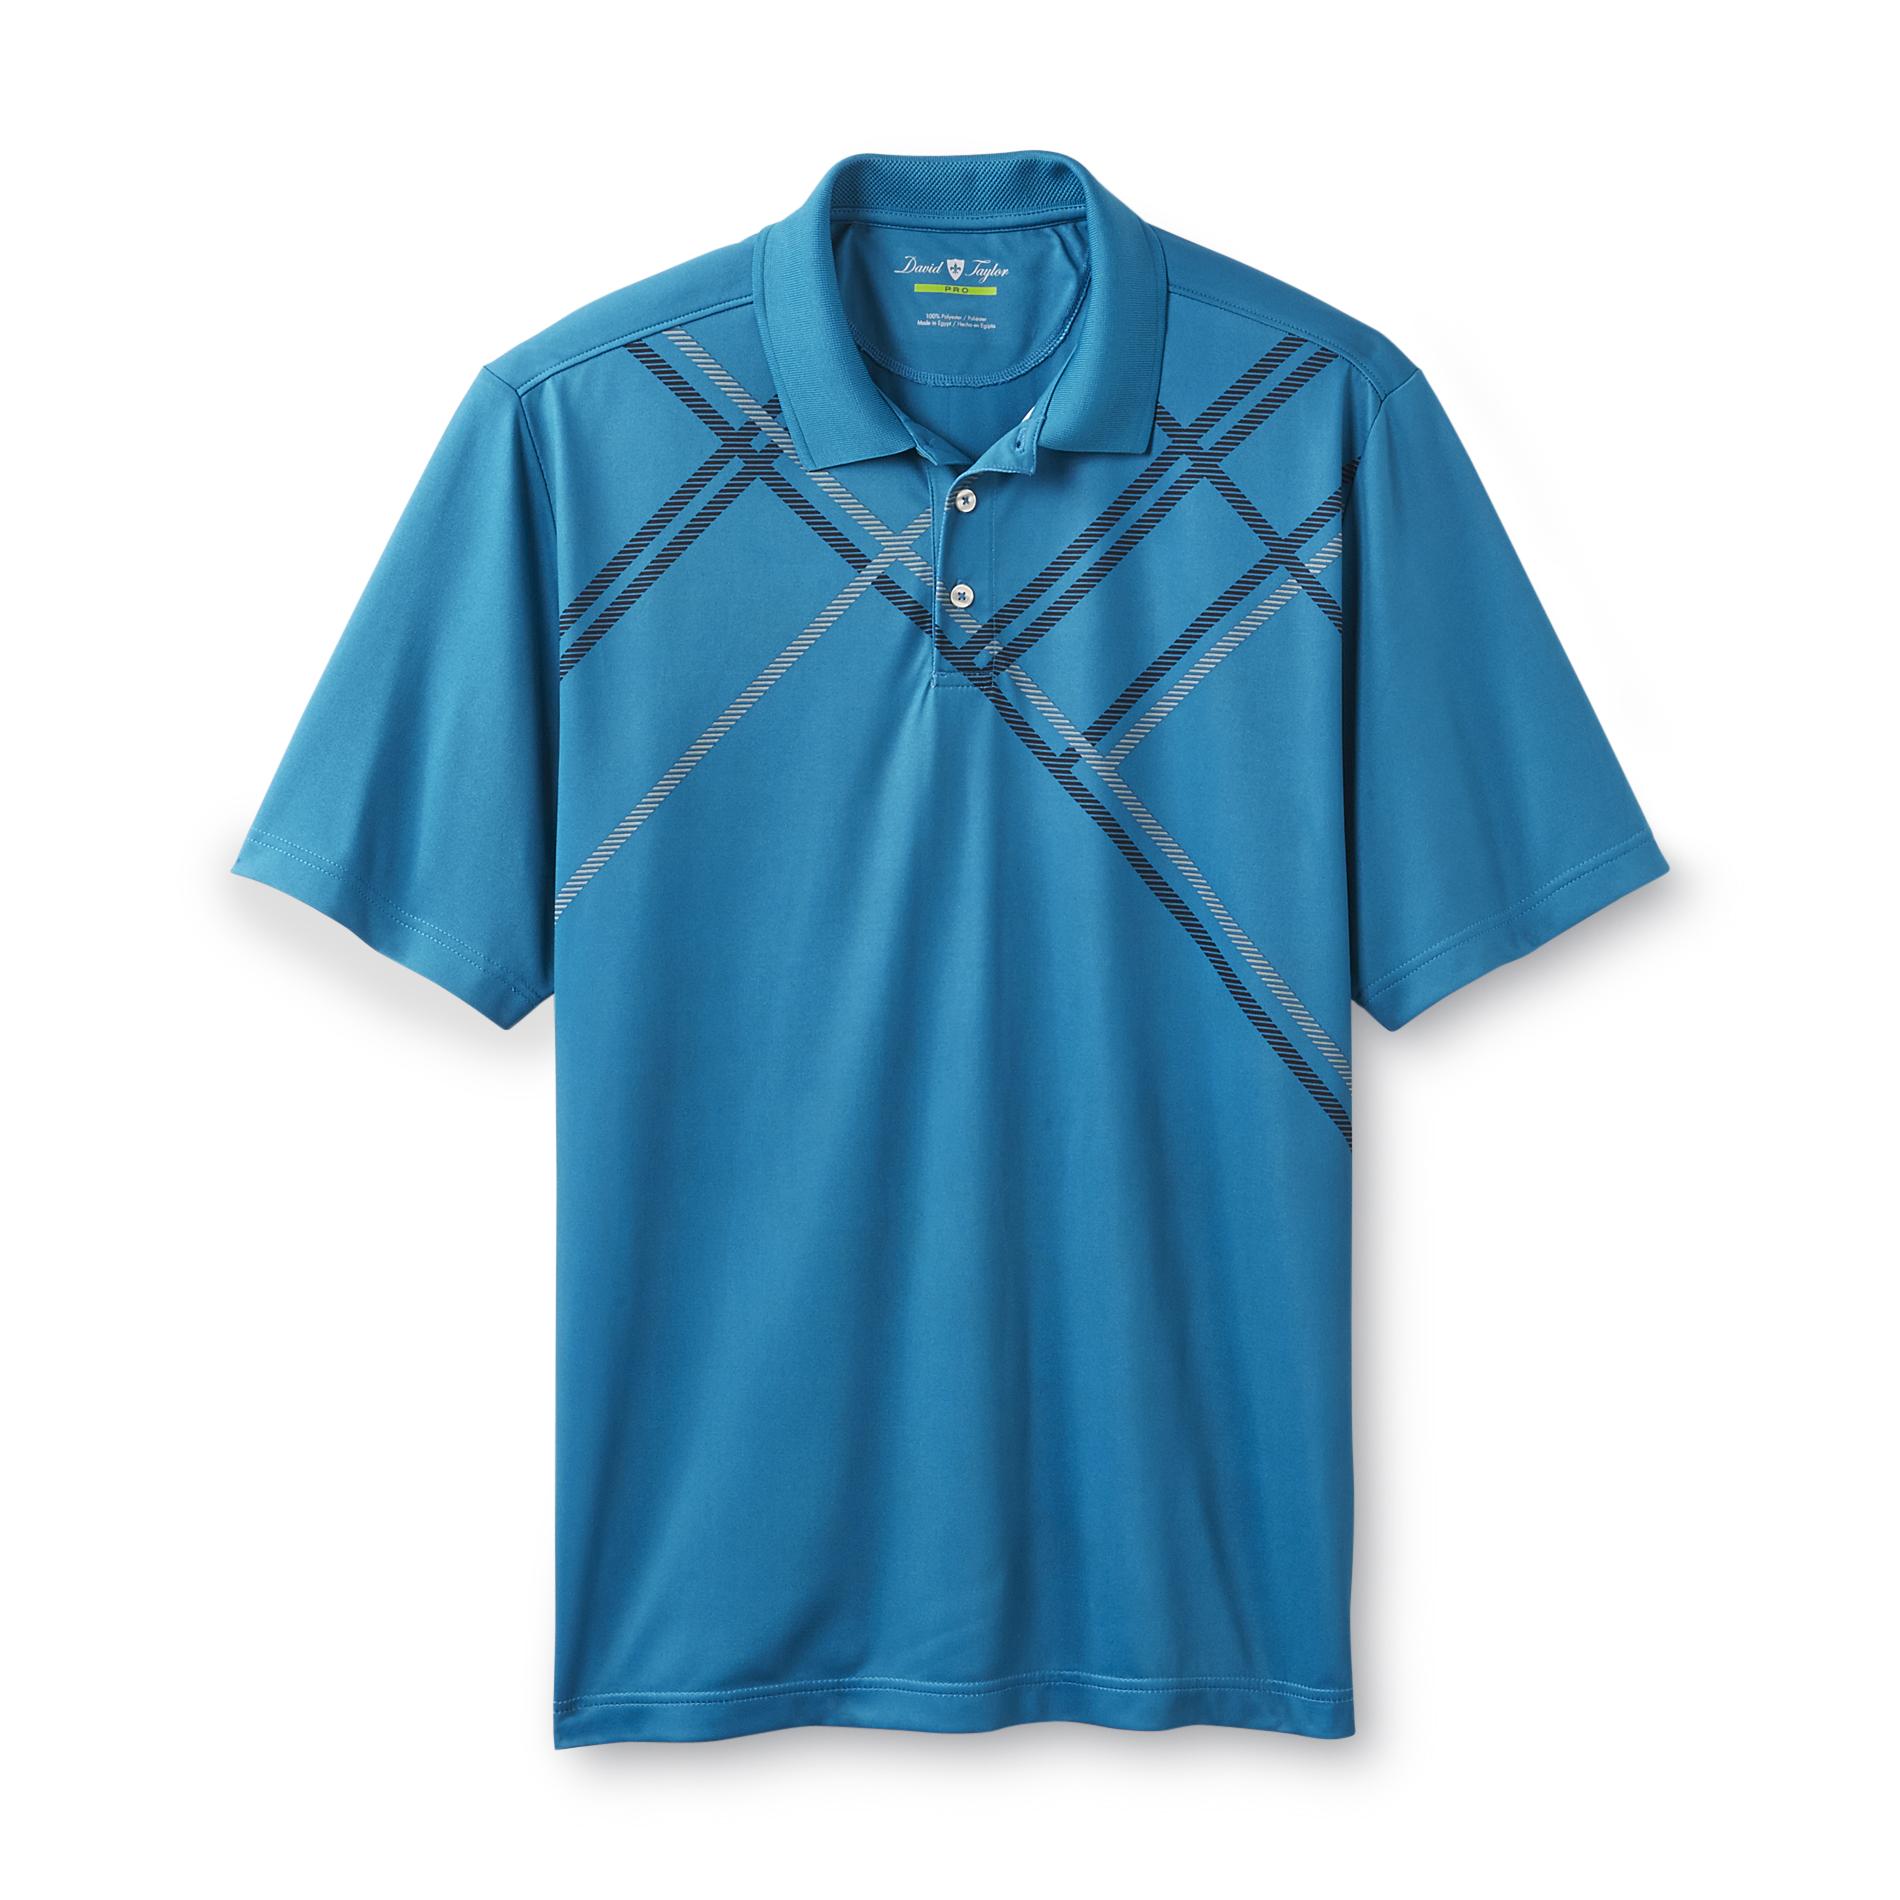 David Taylor Collection Men's Big & Tall Jersey Polo Shirt - Argyle